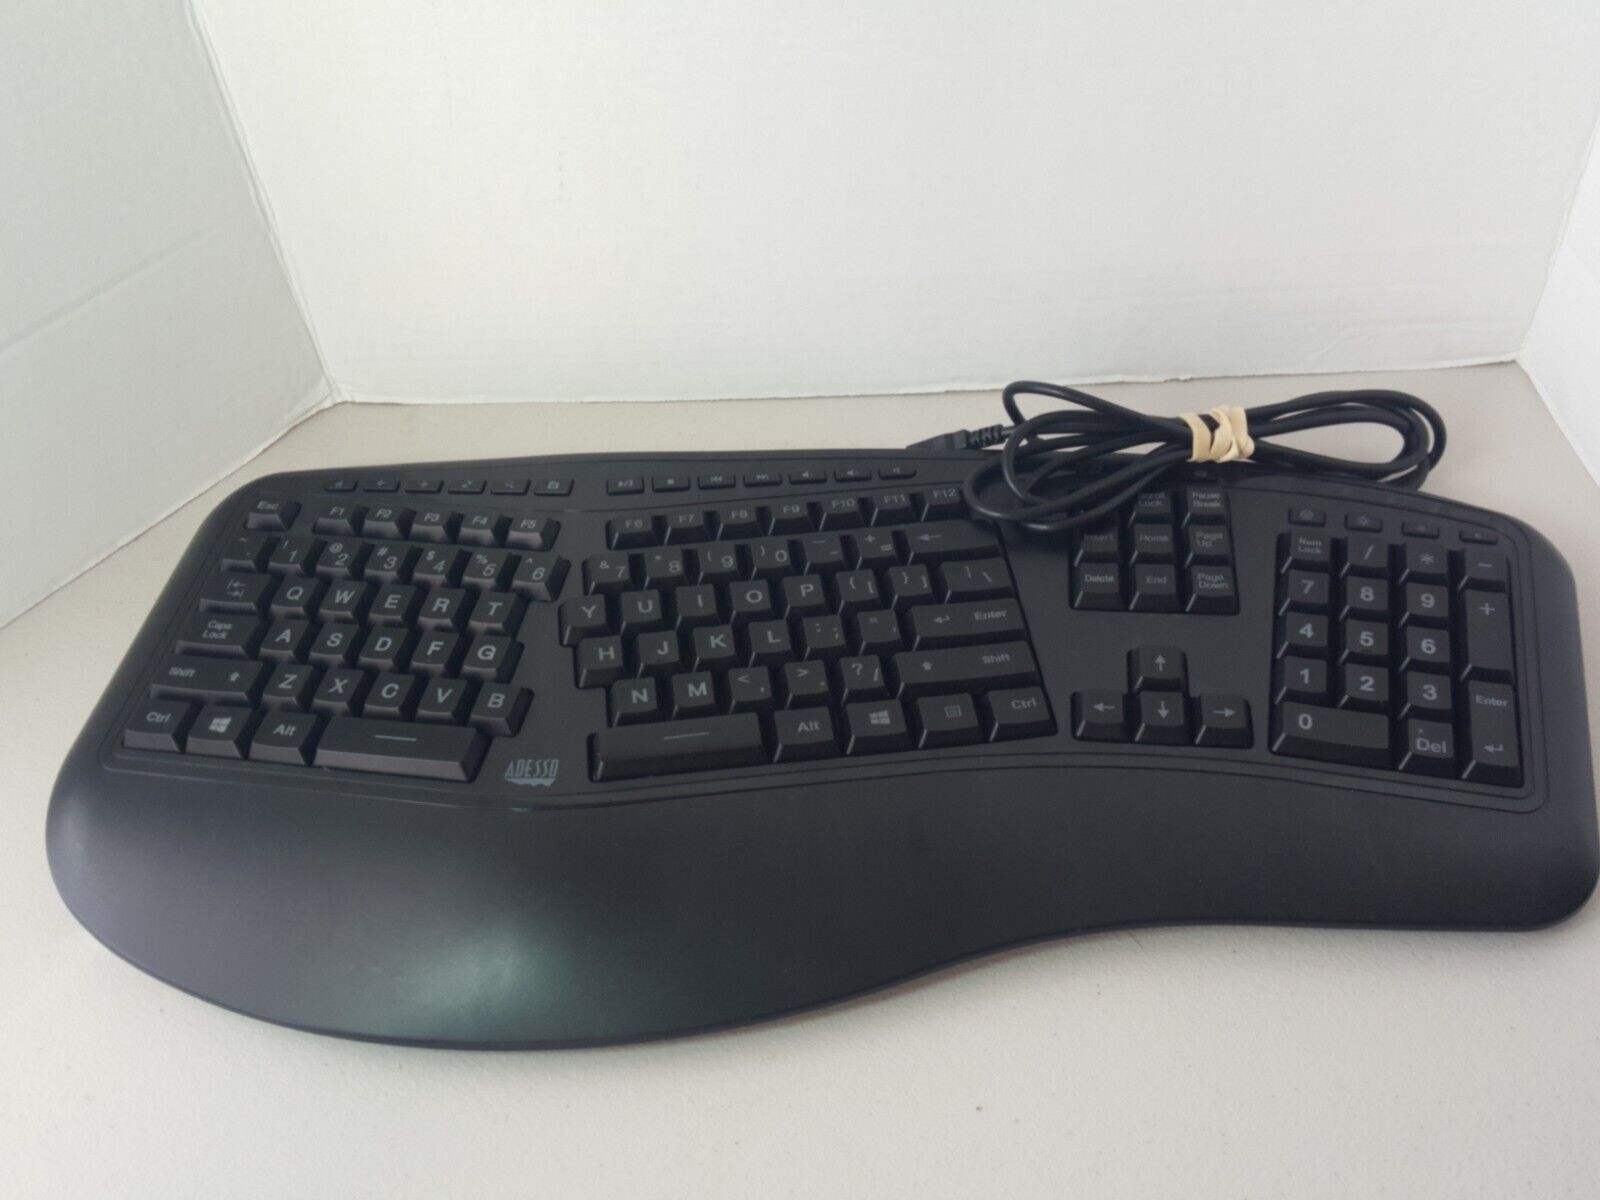 Adesso Tru Form 150 3 Color Illuminated Ergonomic Keyboard - AKB-150EB